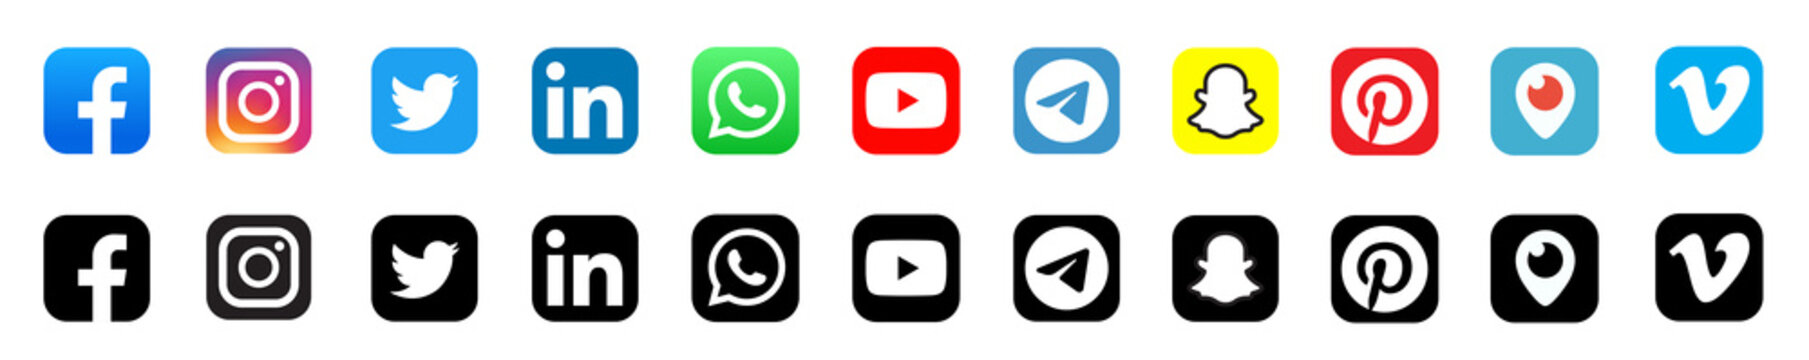 Realistic social media logotype collection: Facebook, instagram, twitter, youtube, linkedin, snapchat, telegram, pinterest, whatsap, periscope, vimeo. Social media icons. - stock vector editorial.